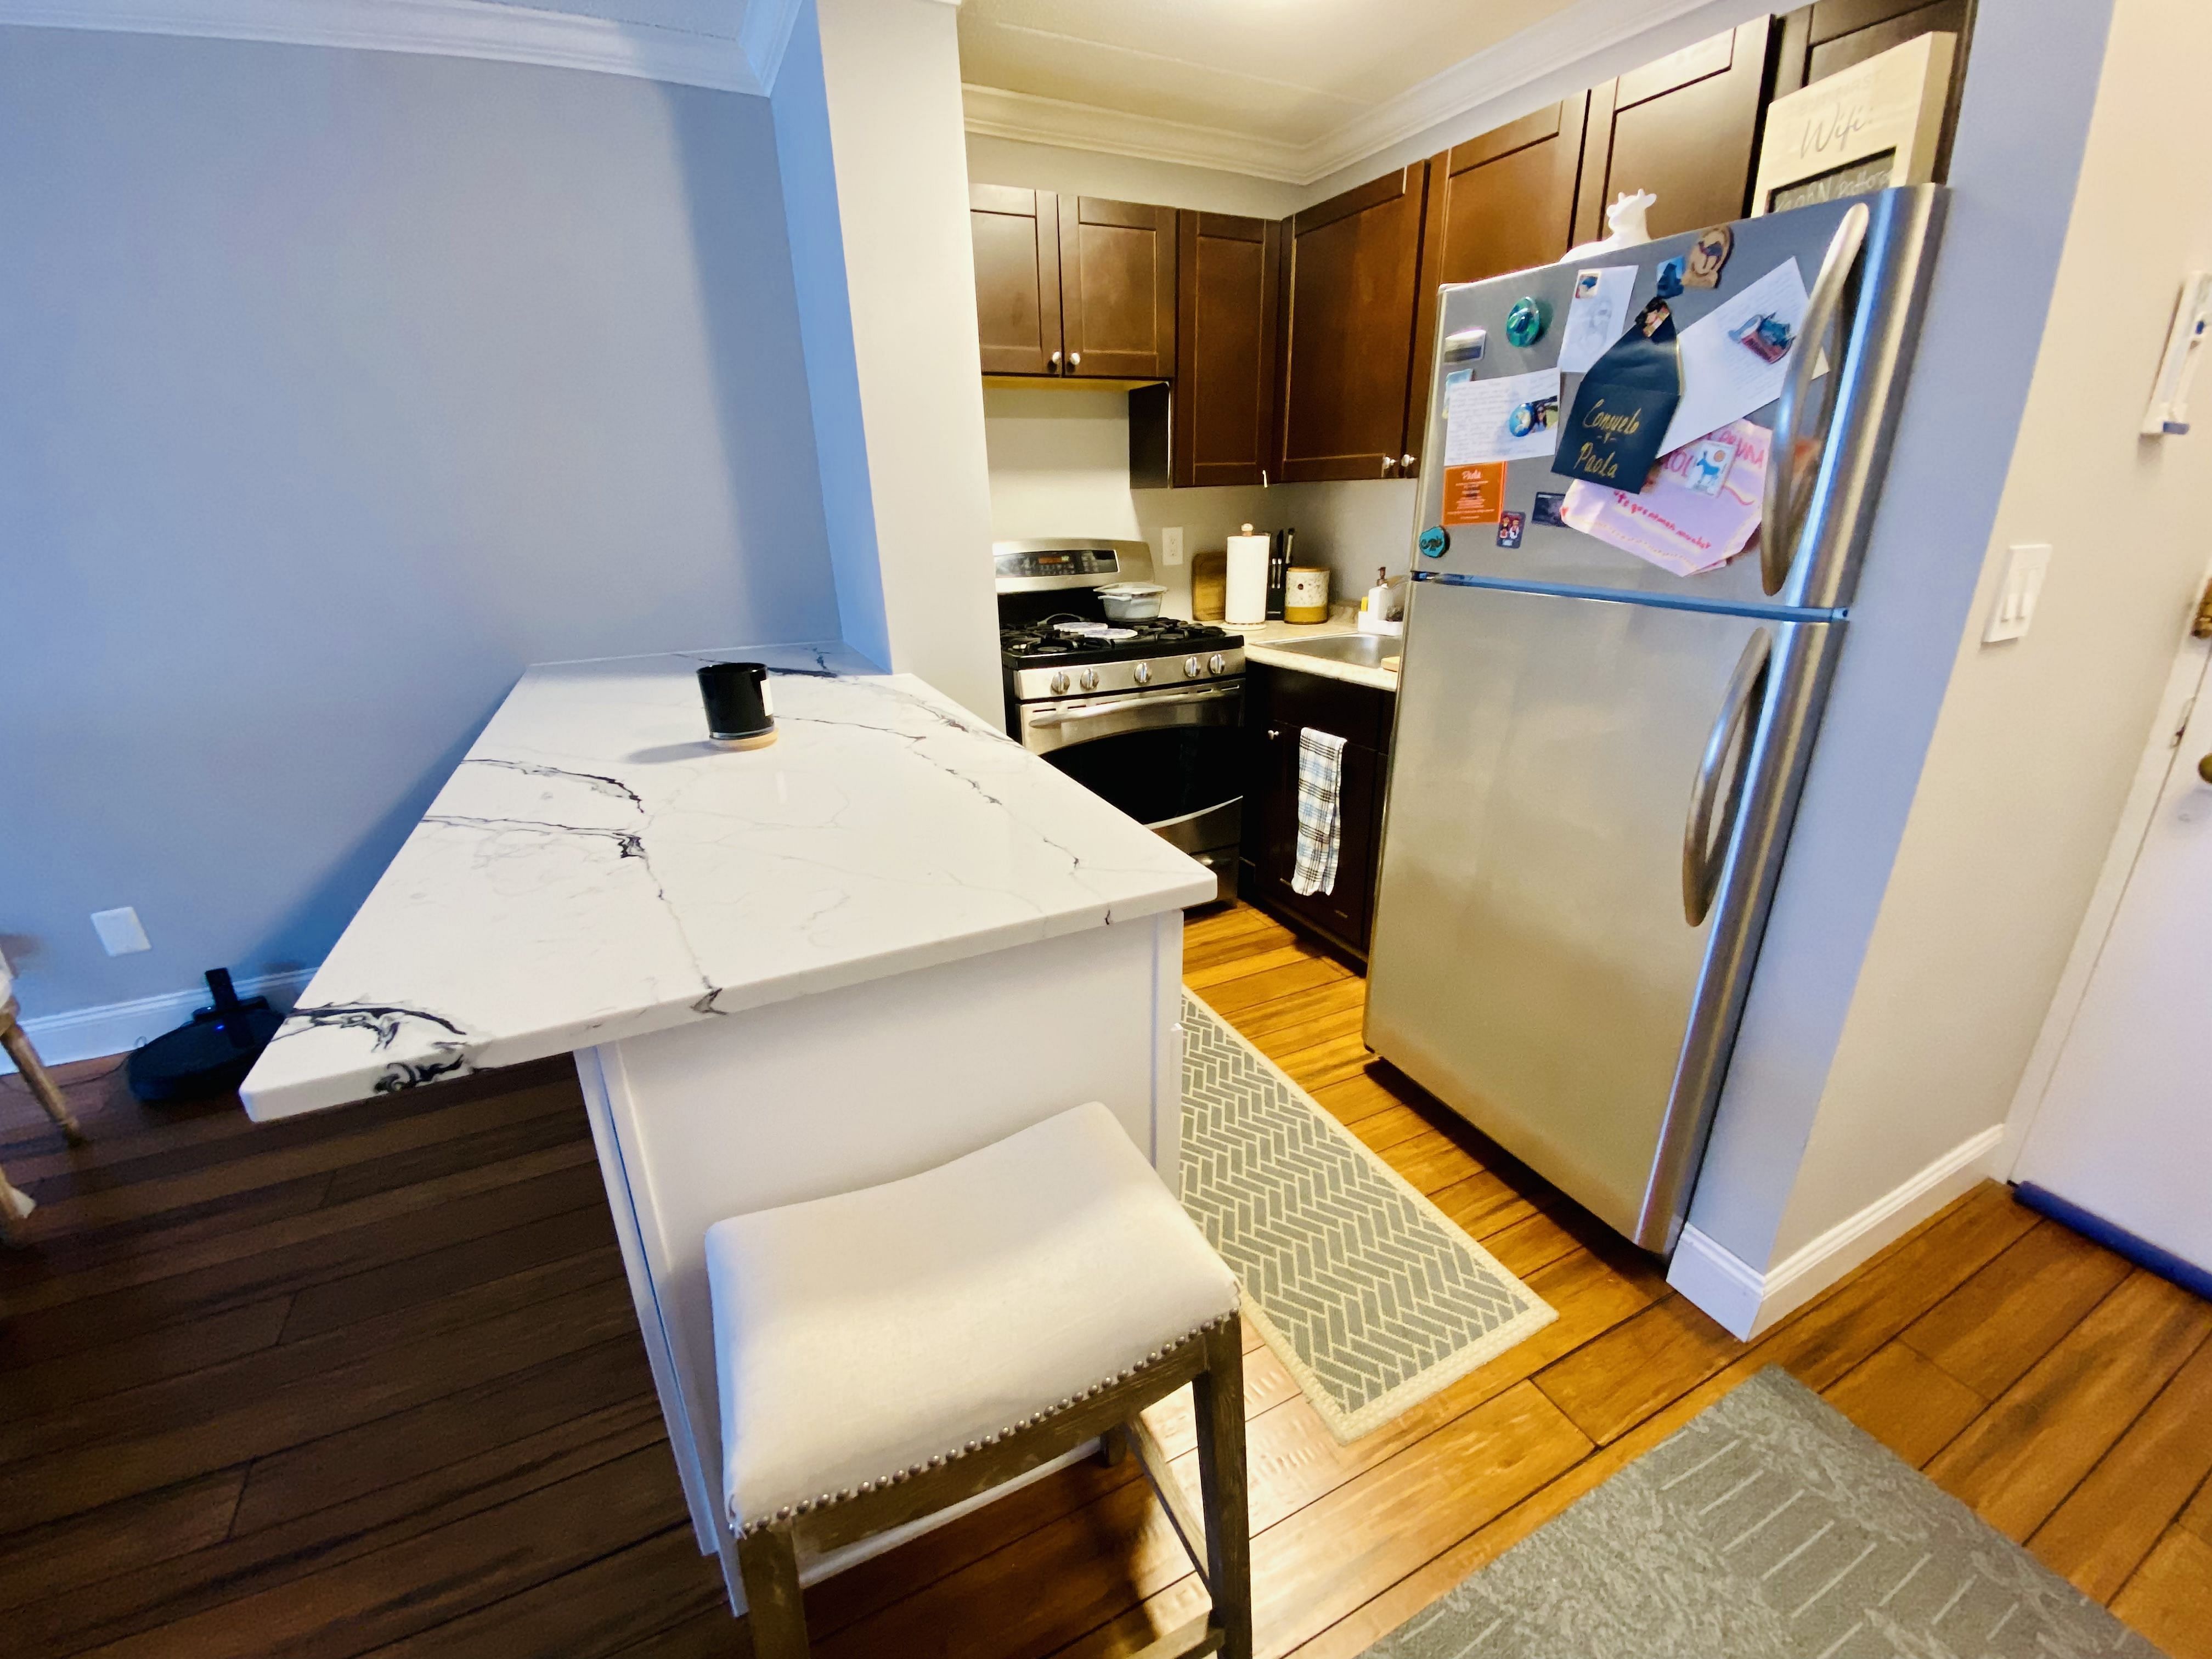 JWguest Apartment at Mount Kisco, New York | Modern Cozy Apartment Close to Bethels | Jwbnb no brobnb 7